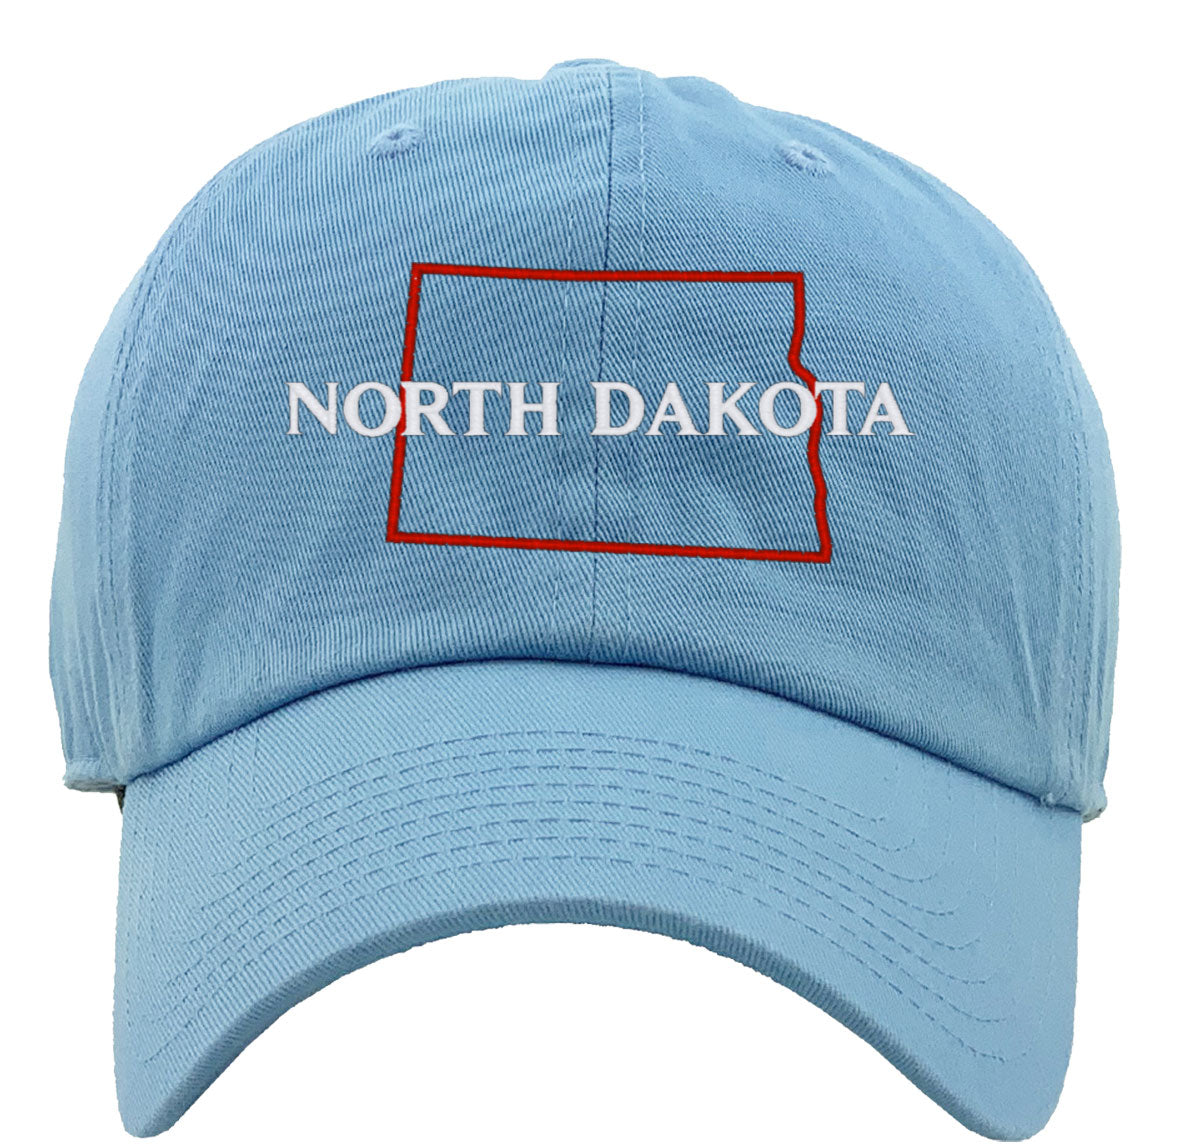 North Dakota Premium Baseball Cap